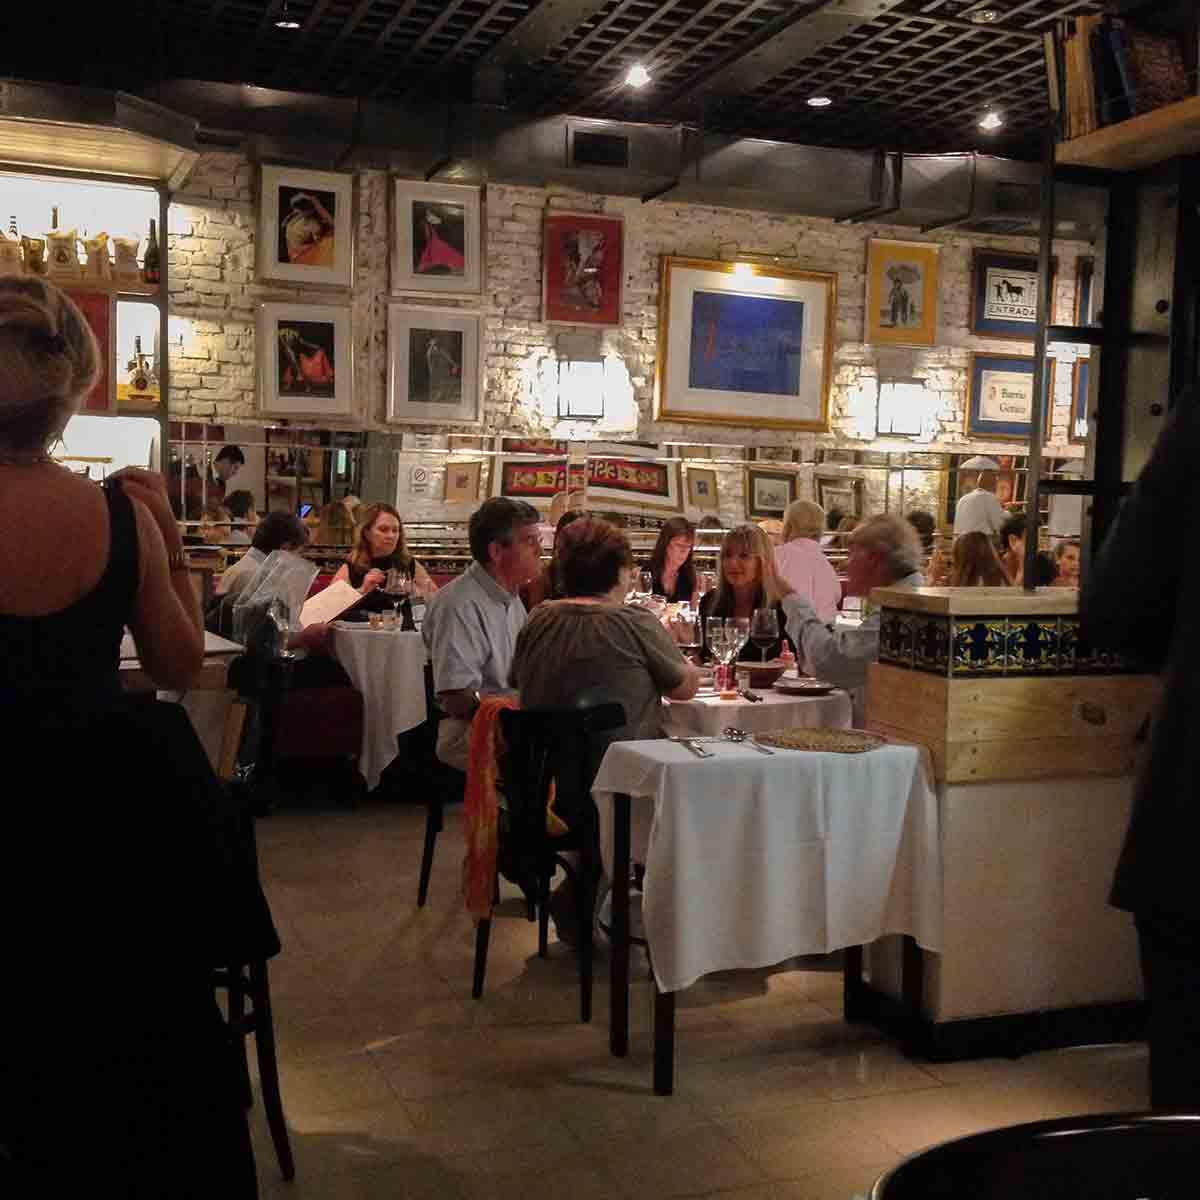 An interior of a restaurant in Uruguay.